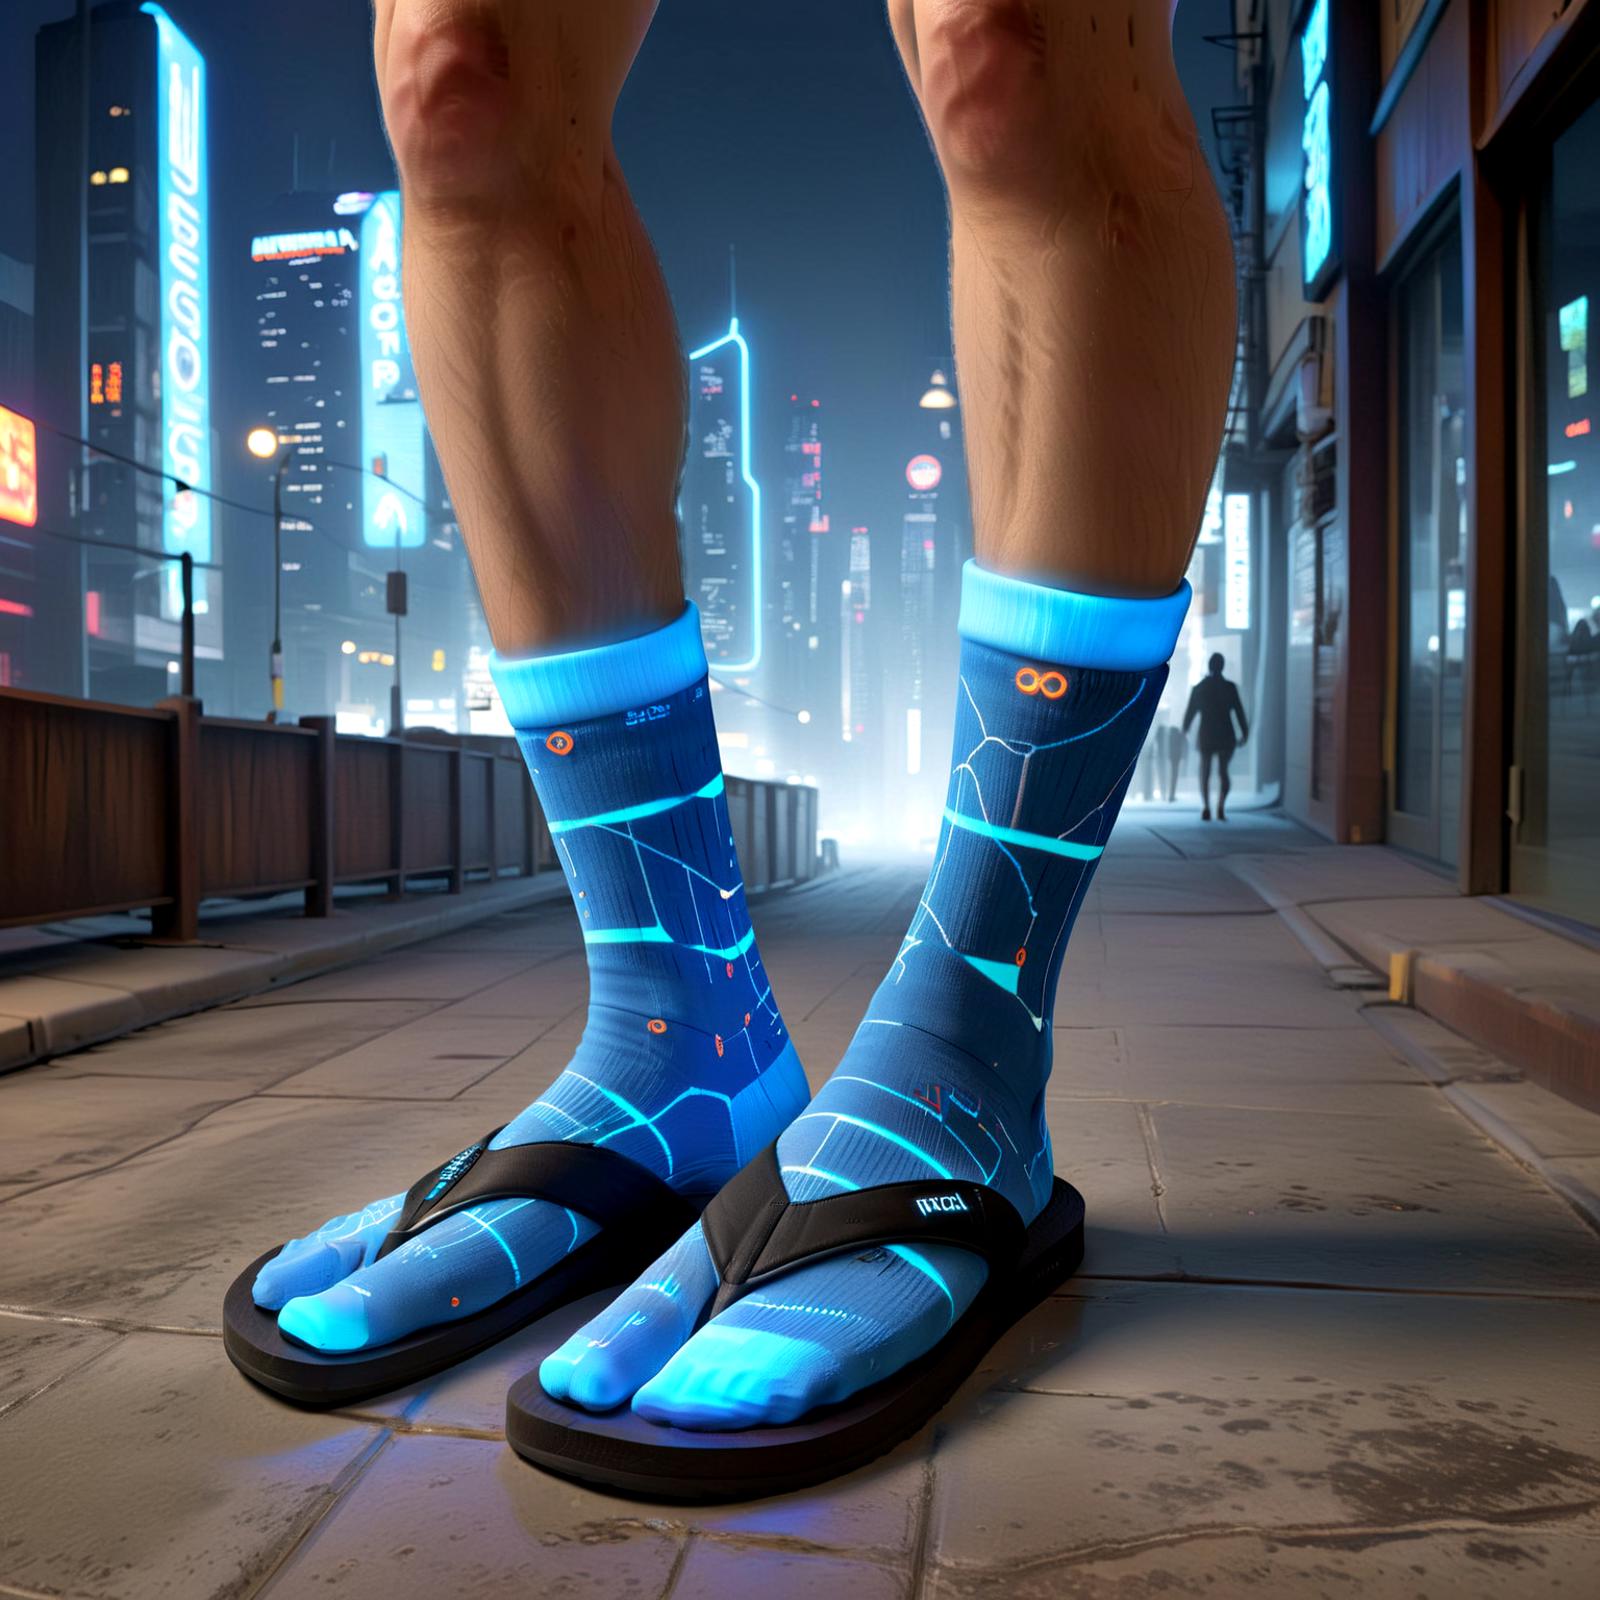 Flip Flops with Socks [SDXL] image by denrakeiw